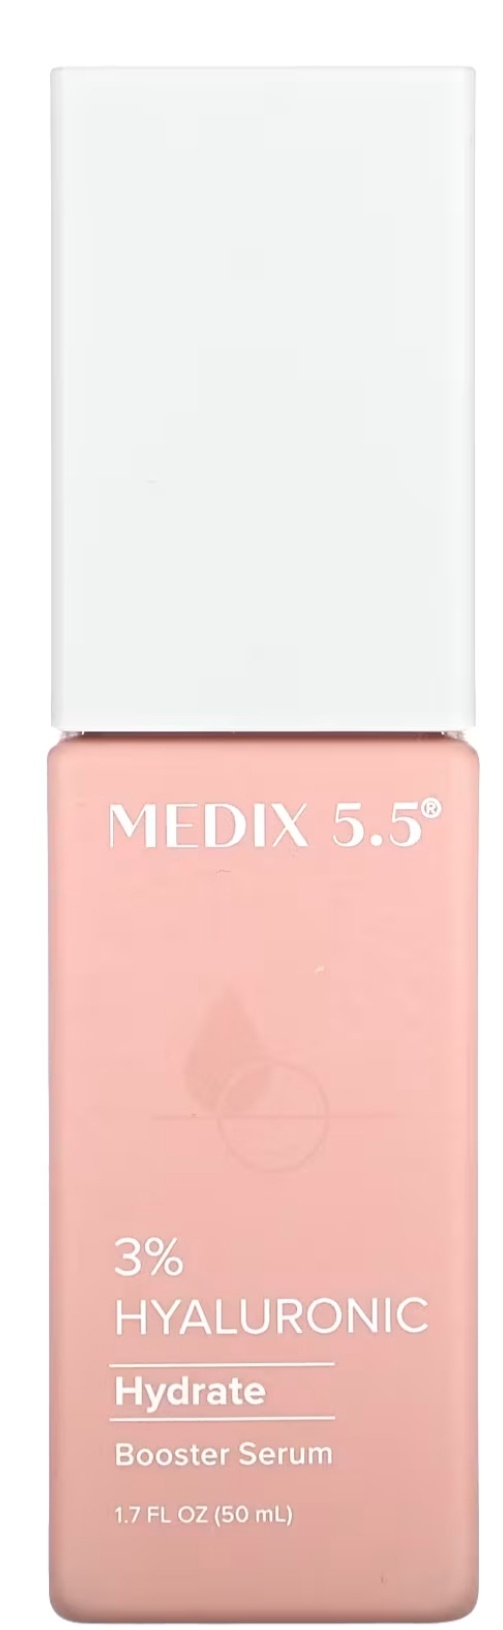 Medix 5.5 Booster Serum 3% Hyaluronic Acid